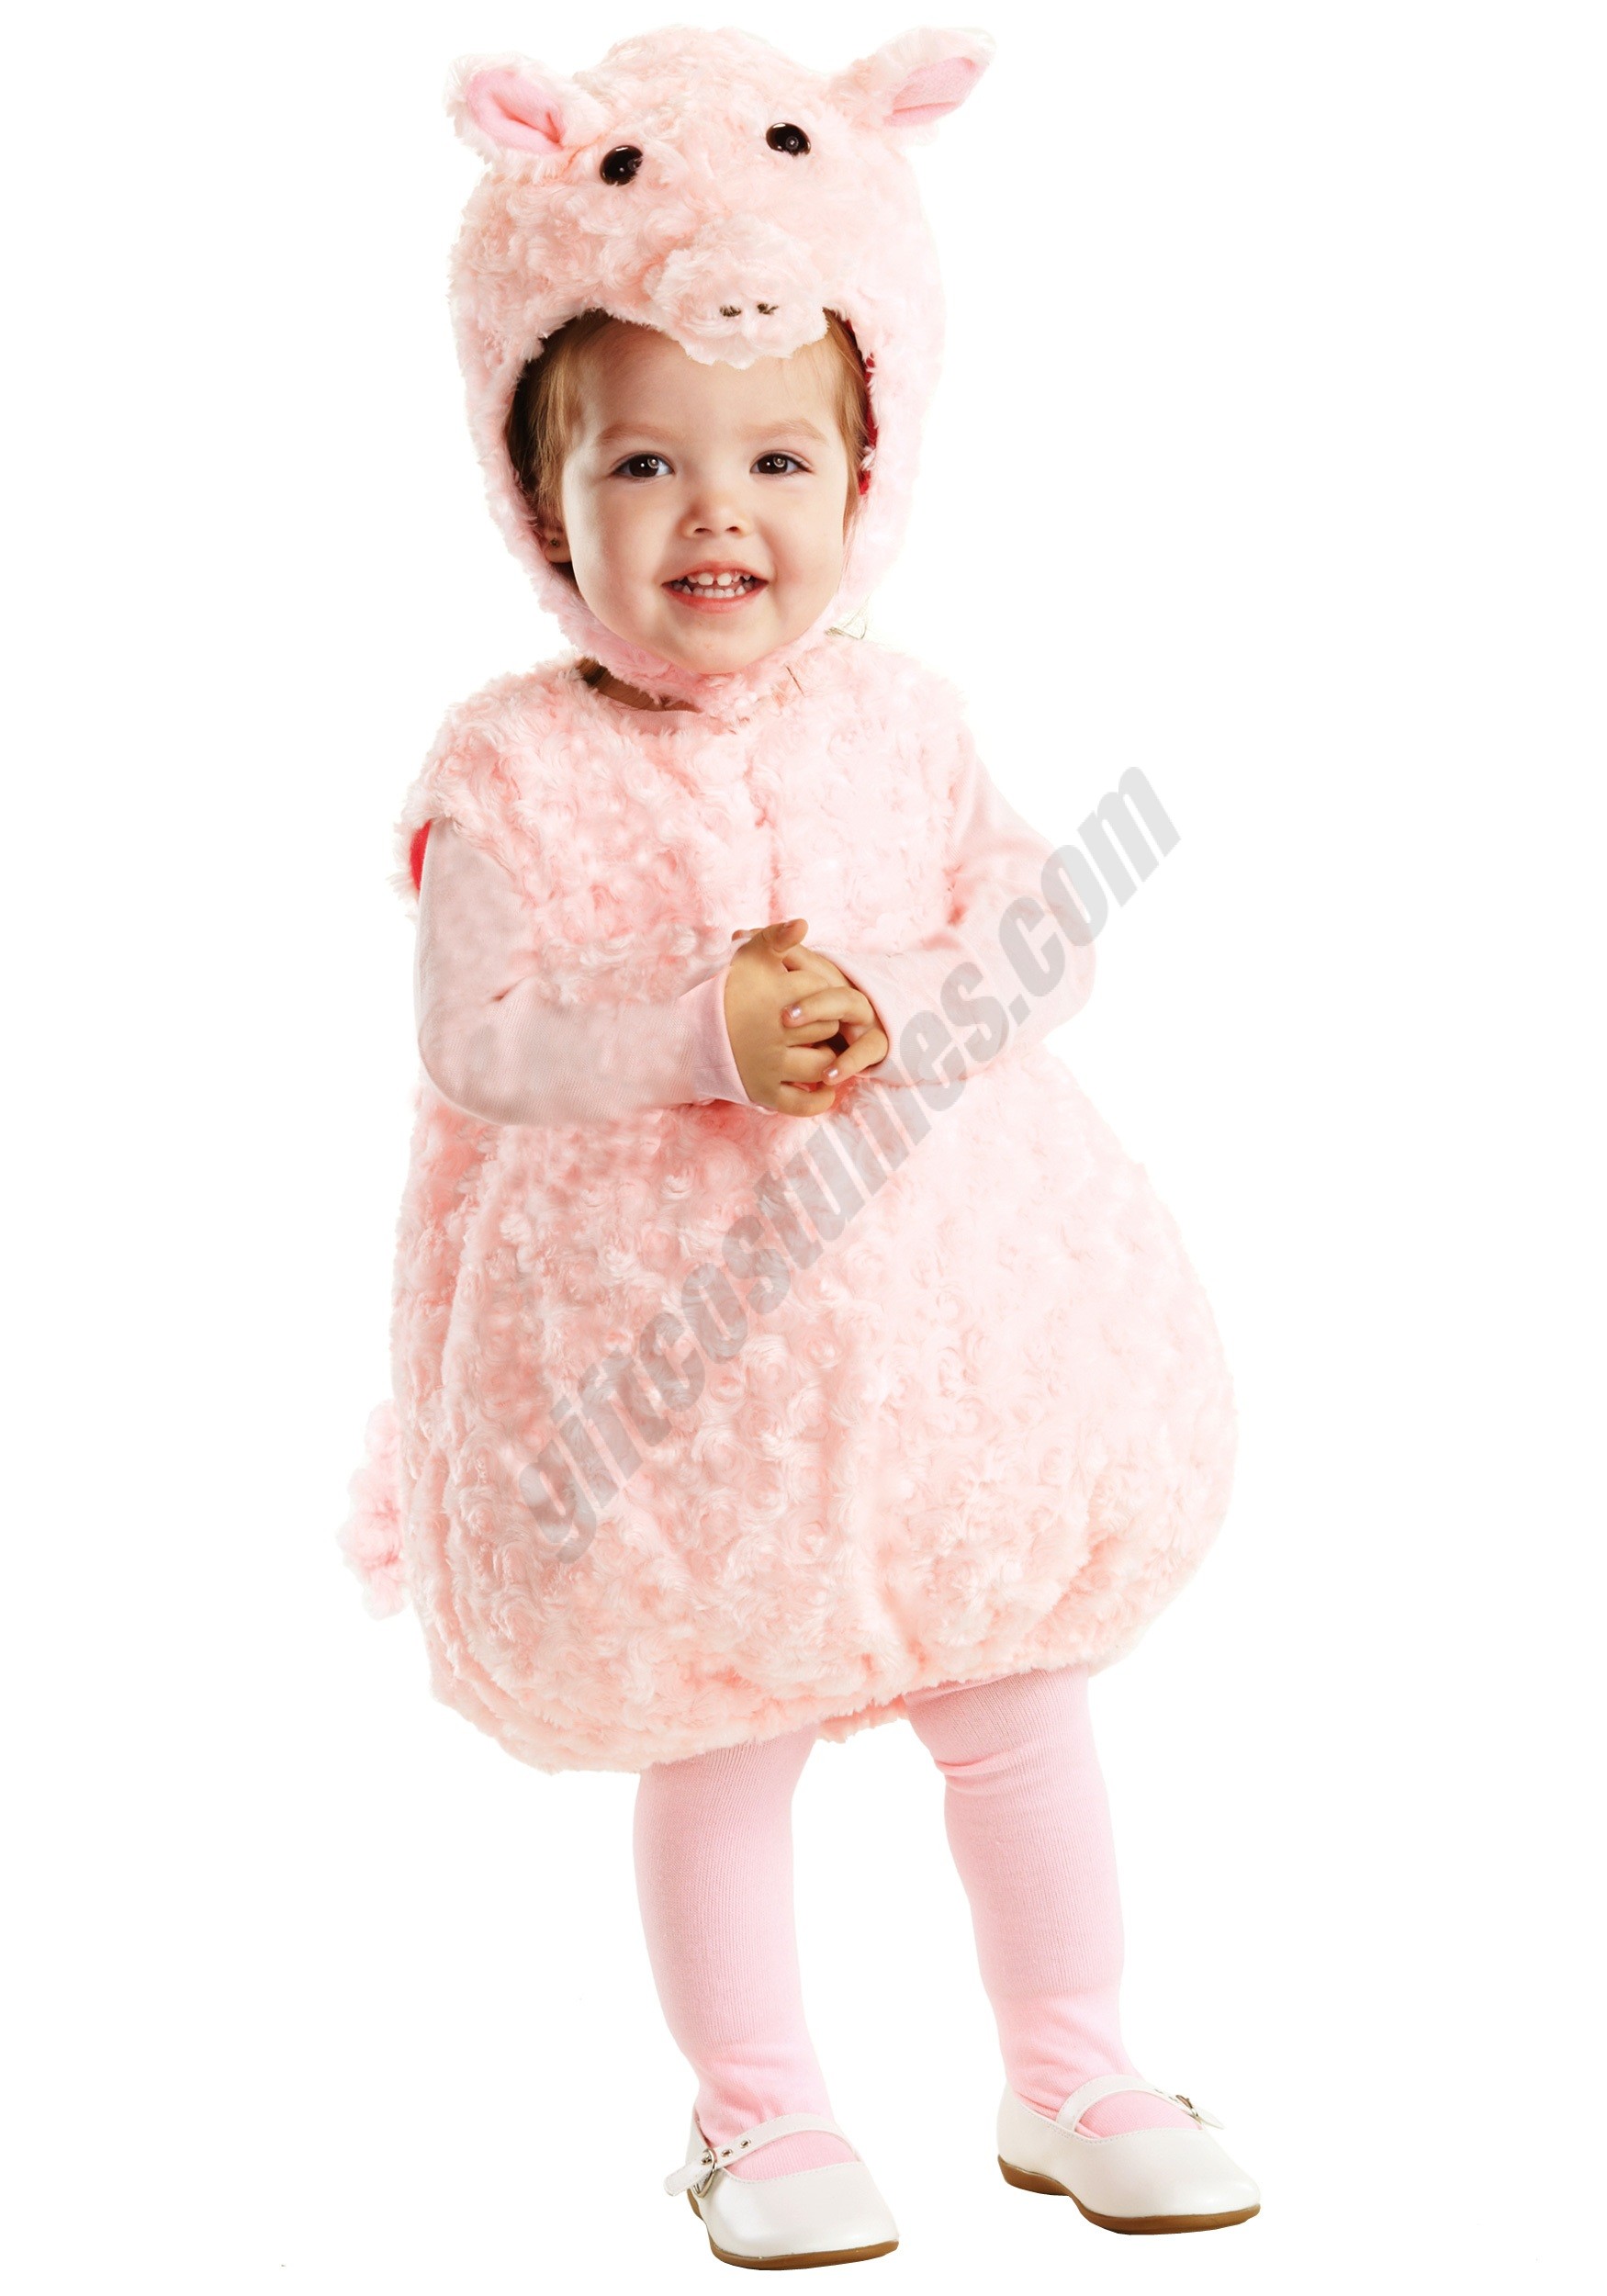 Toddler Pink Piglet Costume Promotions - Toddler Pink Piglet Costume Promotions